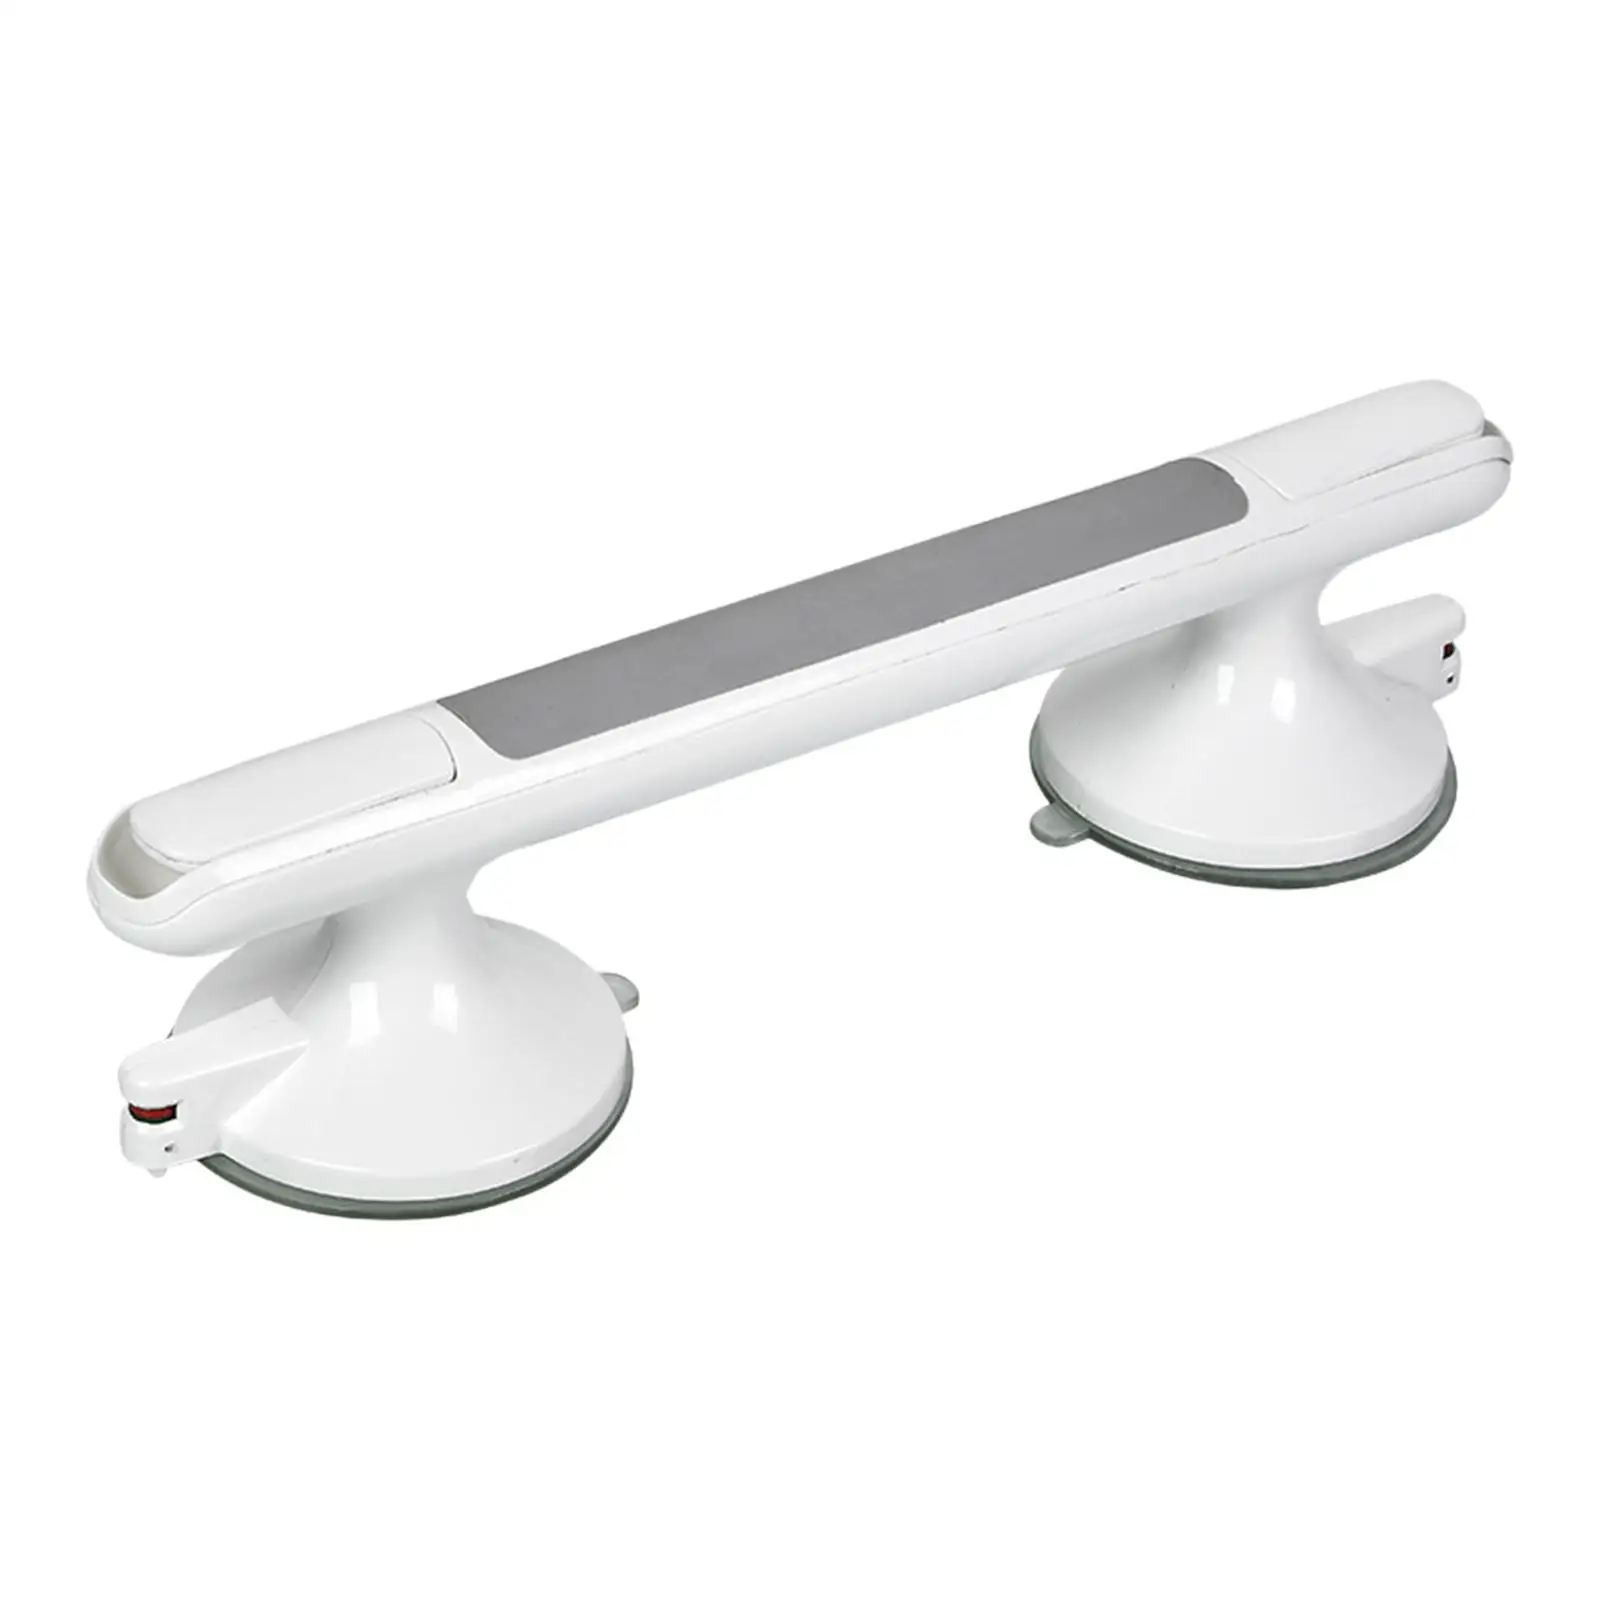 Grab Bars Portable Helping Support Handle Assist Handle for Bathroom Tub Men